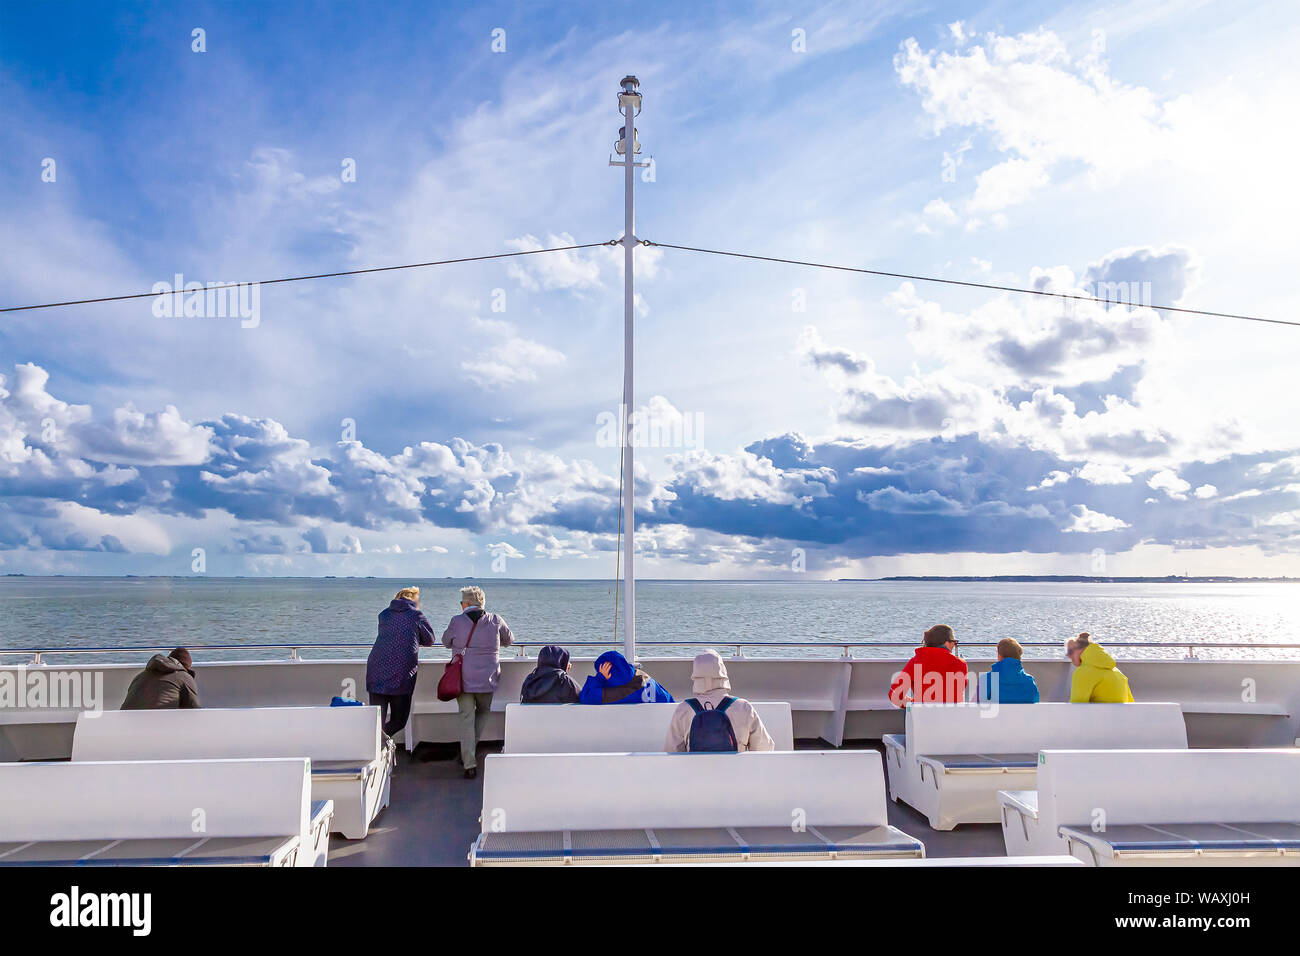 On the Ferry, North Sea, Amrum Foehr Stock Photo